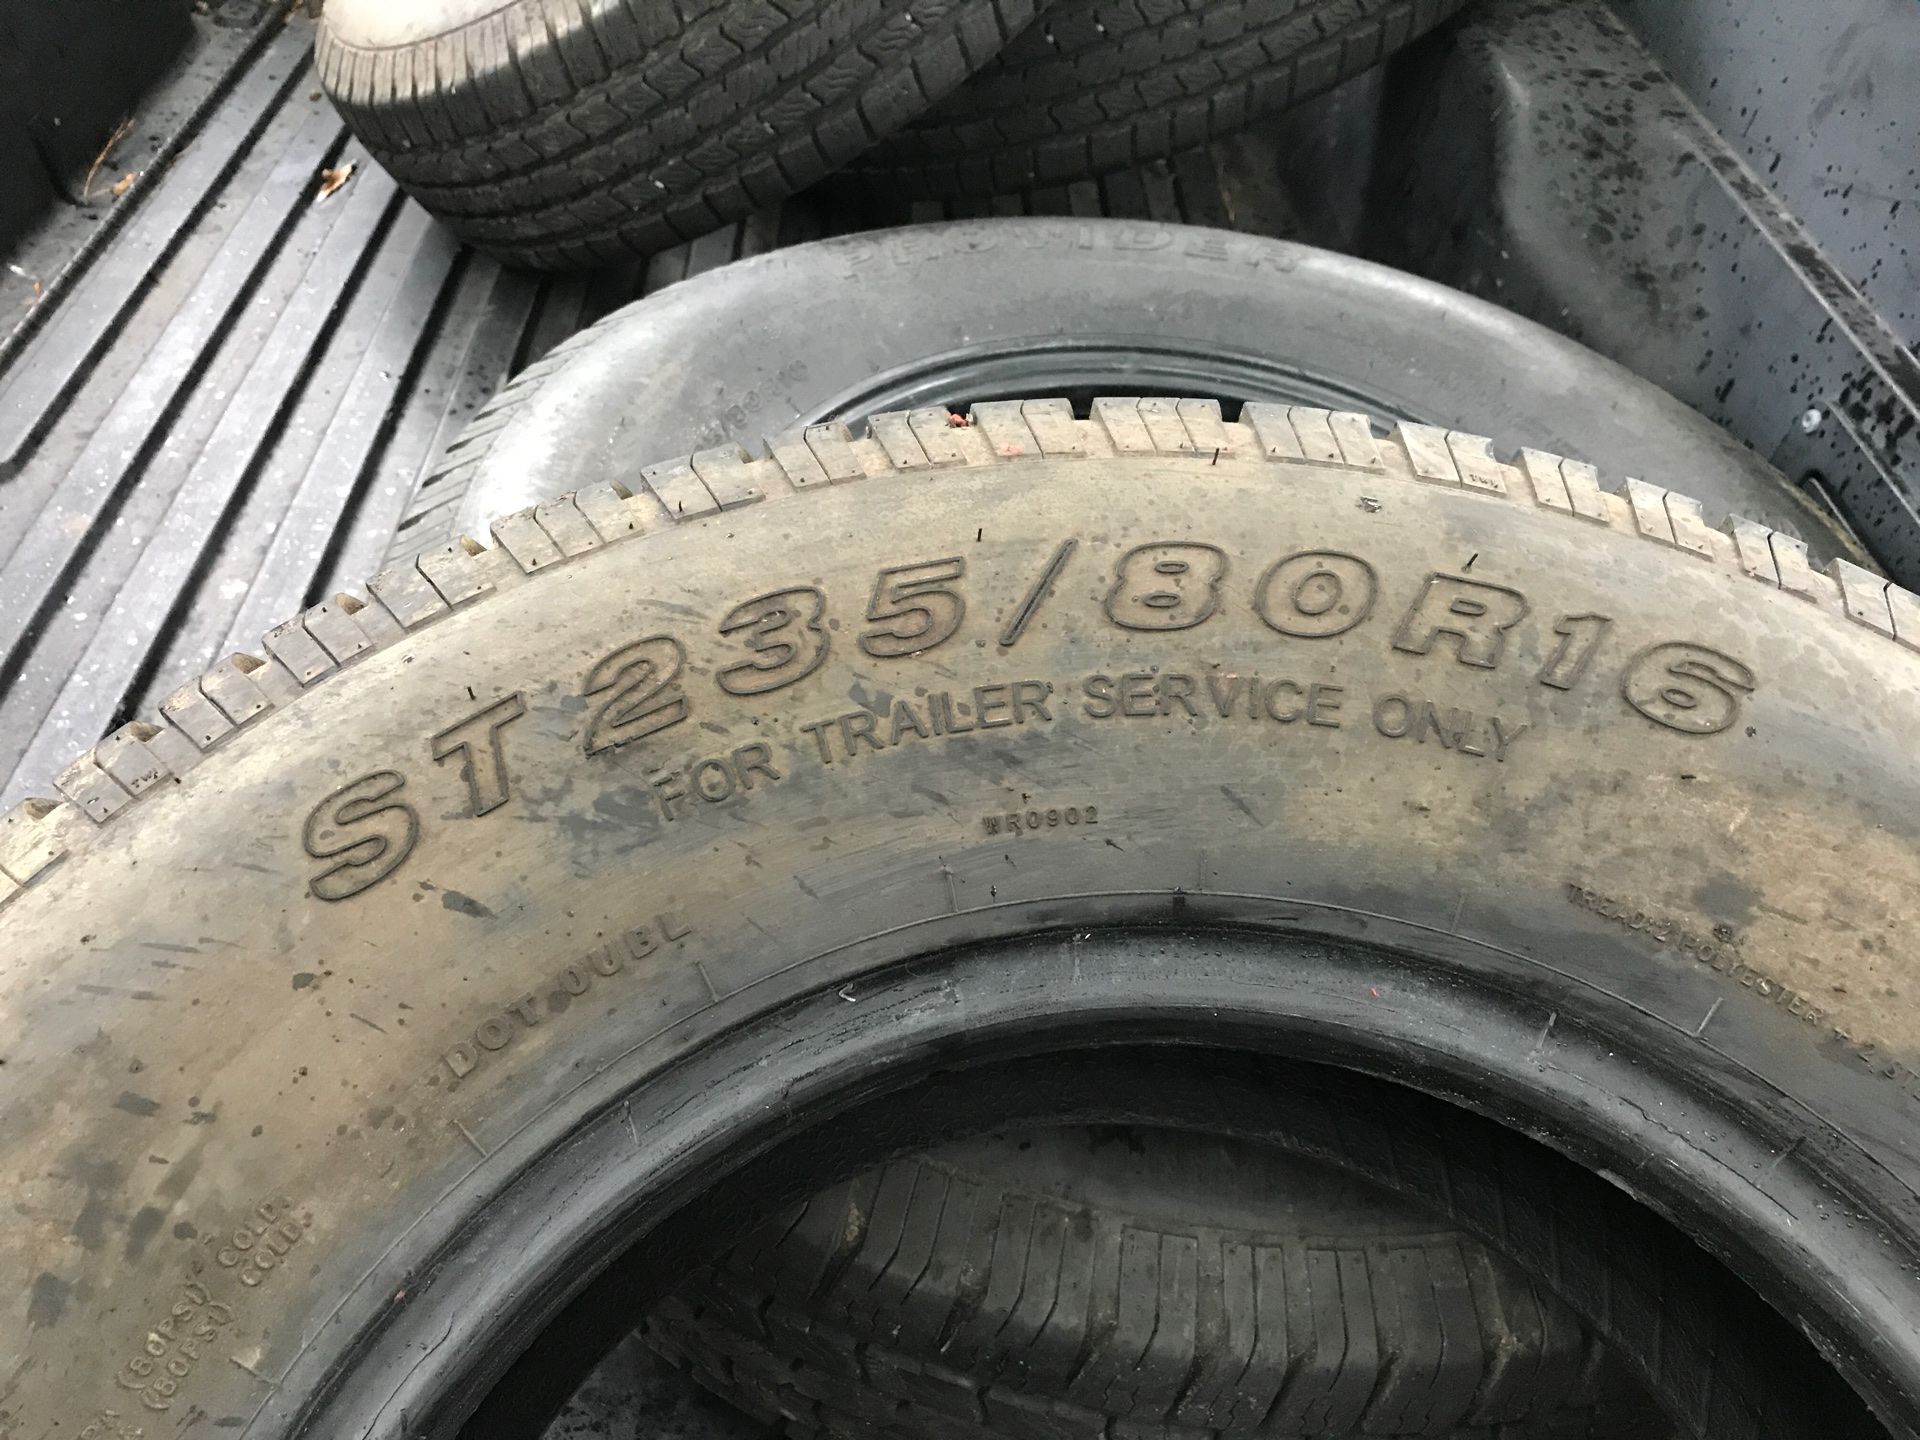 Provider 235/80R16 Trailer tires